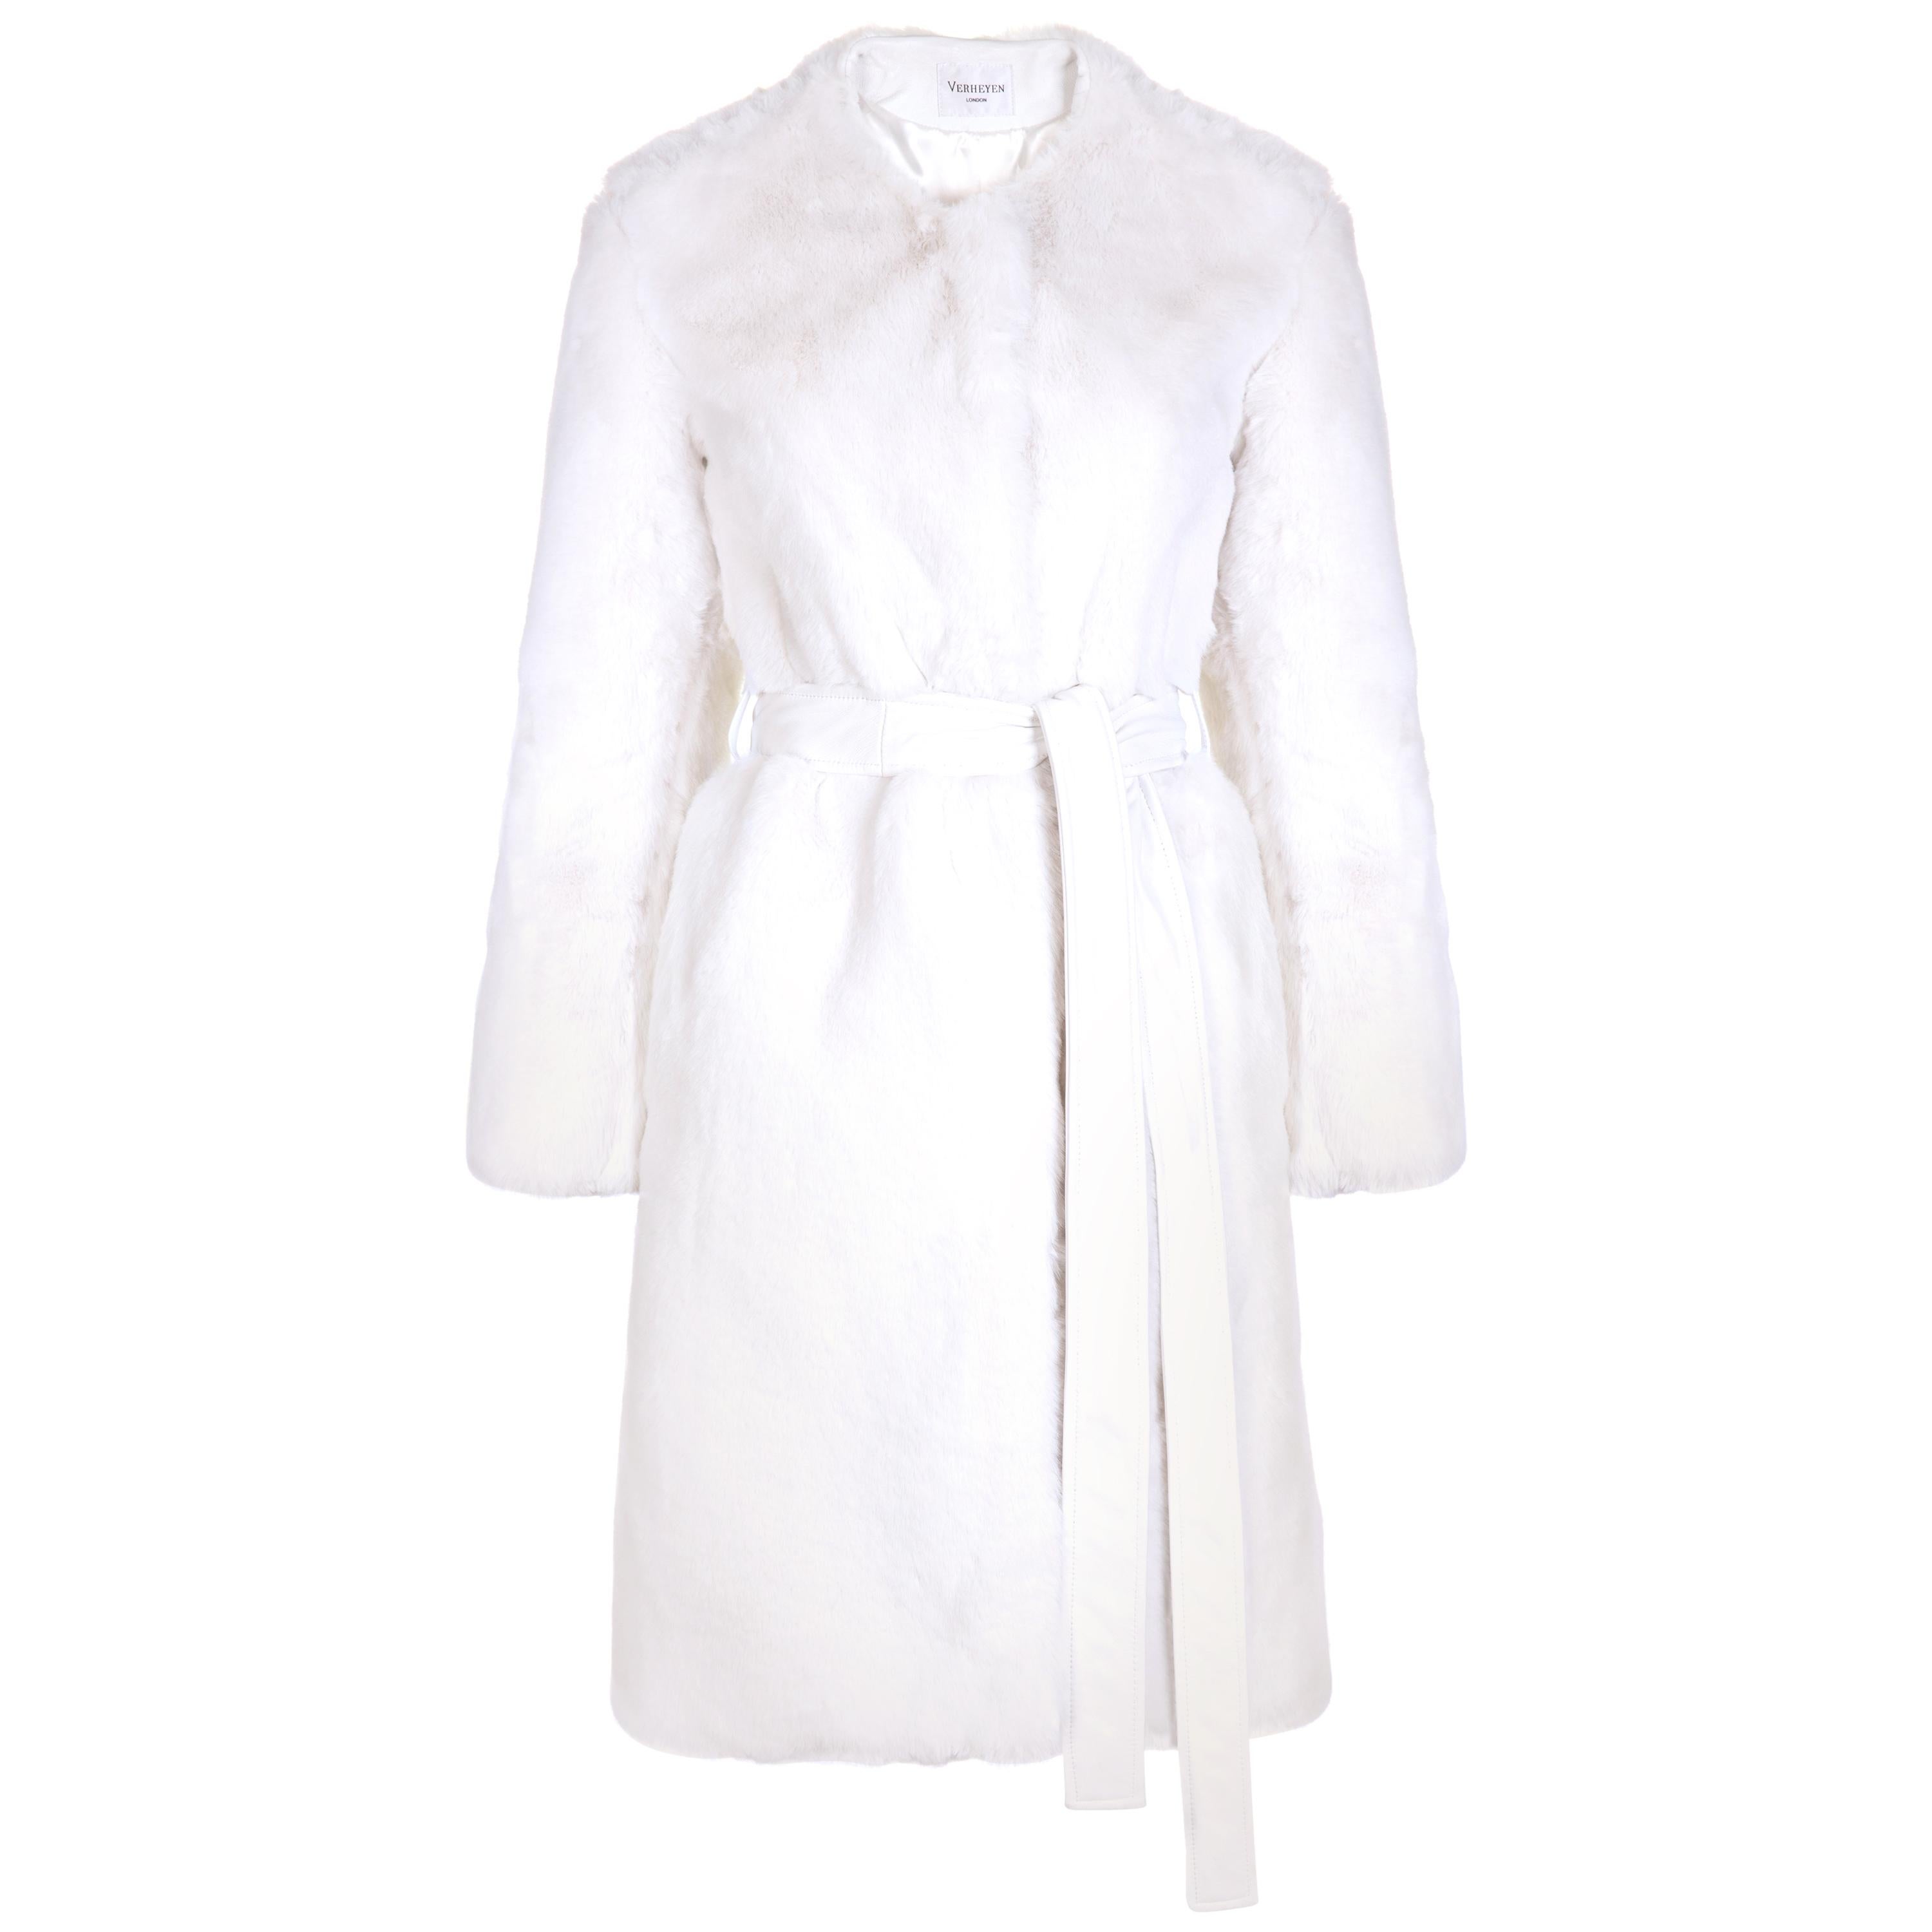 Verheyen London Serena  Collarless Faux Fur Coat in White - Size uk 14 For Sale